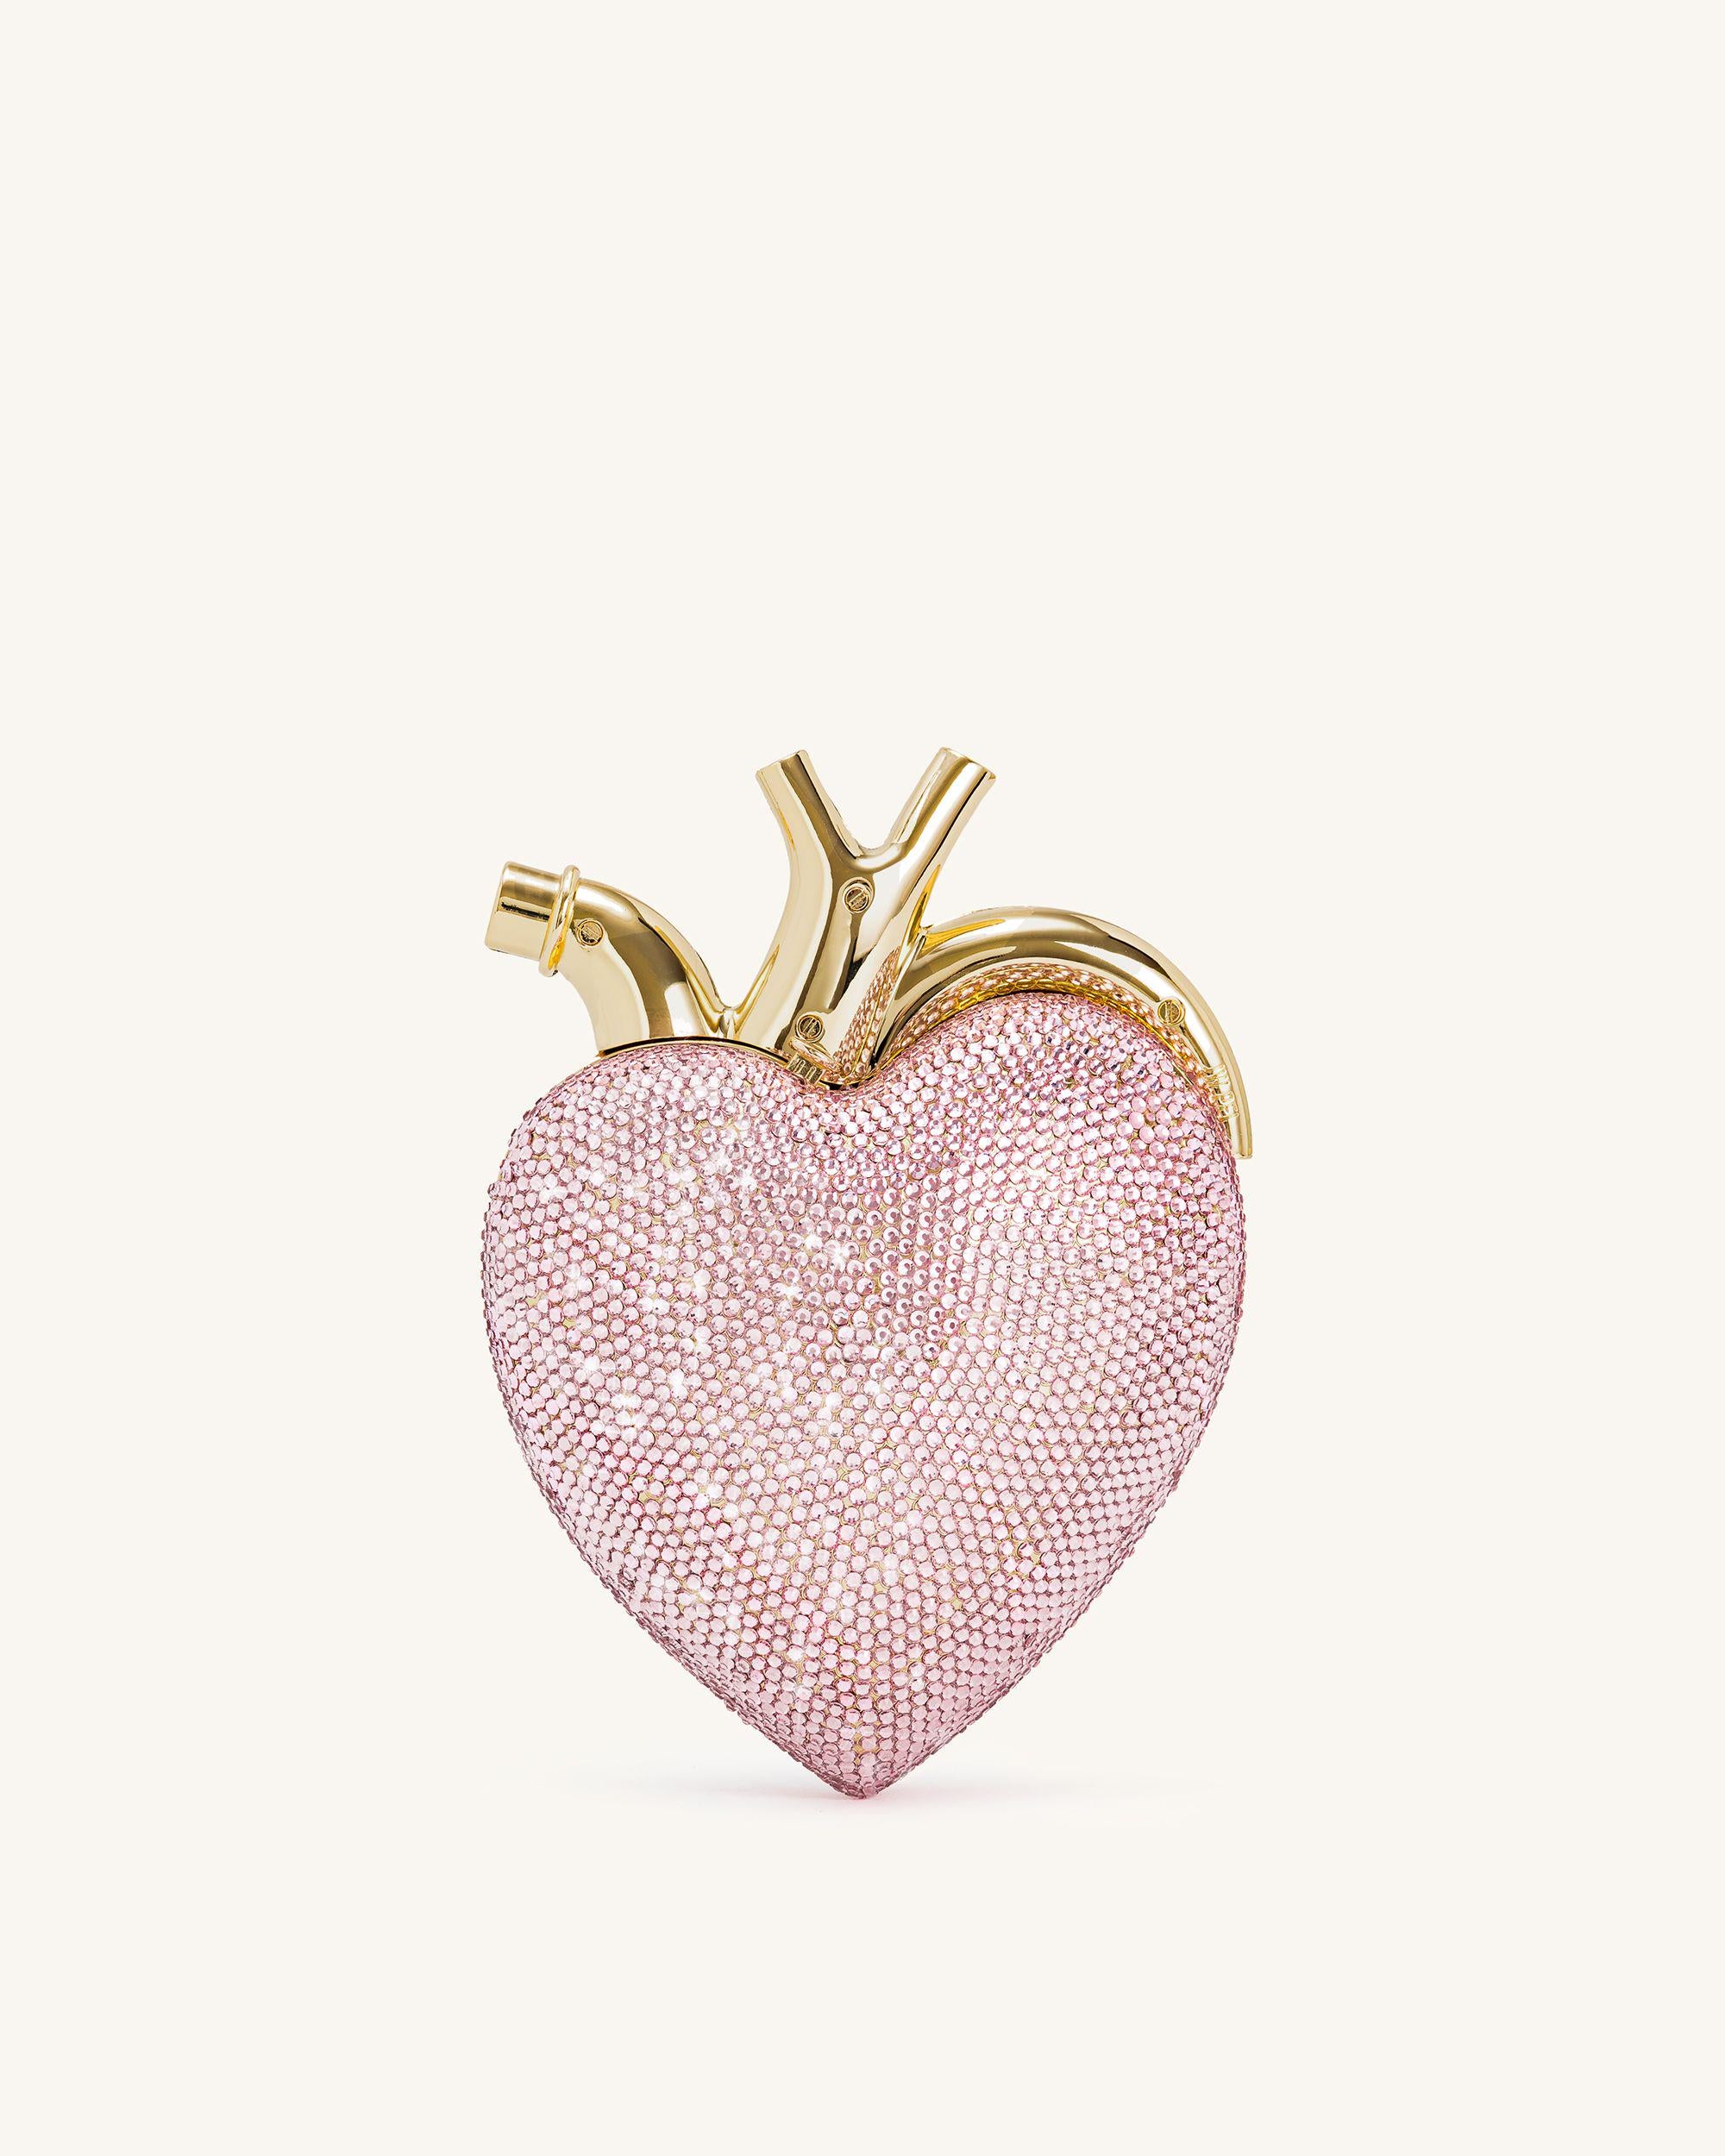 Maren Artificial Crystal Heart Shaped Bag - Pink - JW PEI